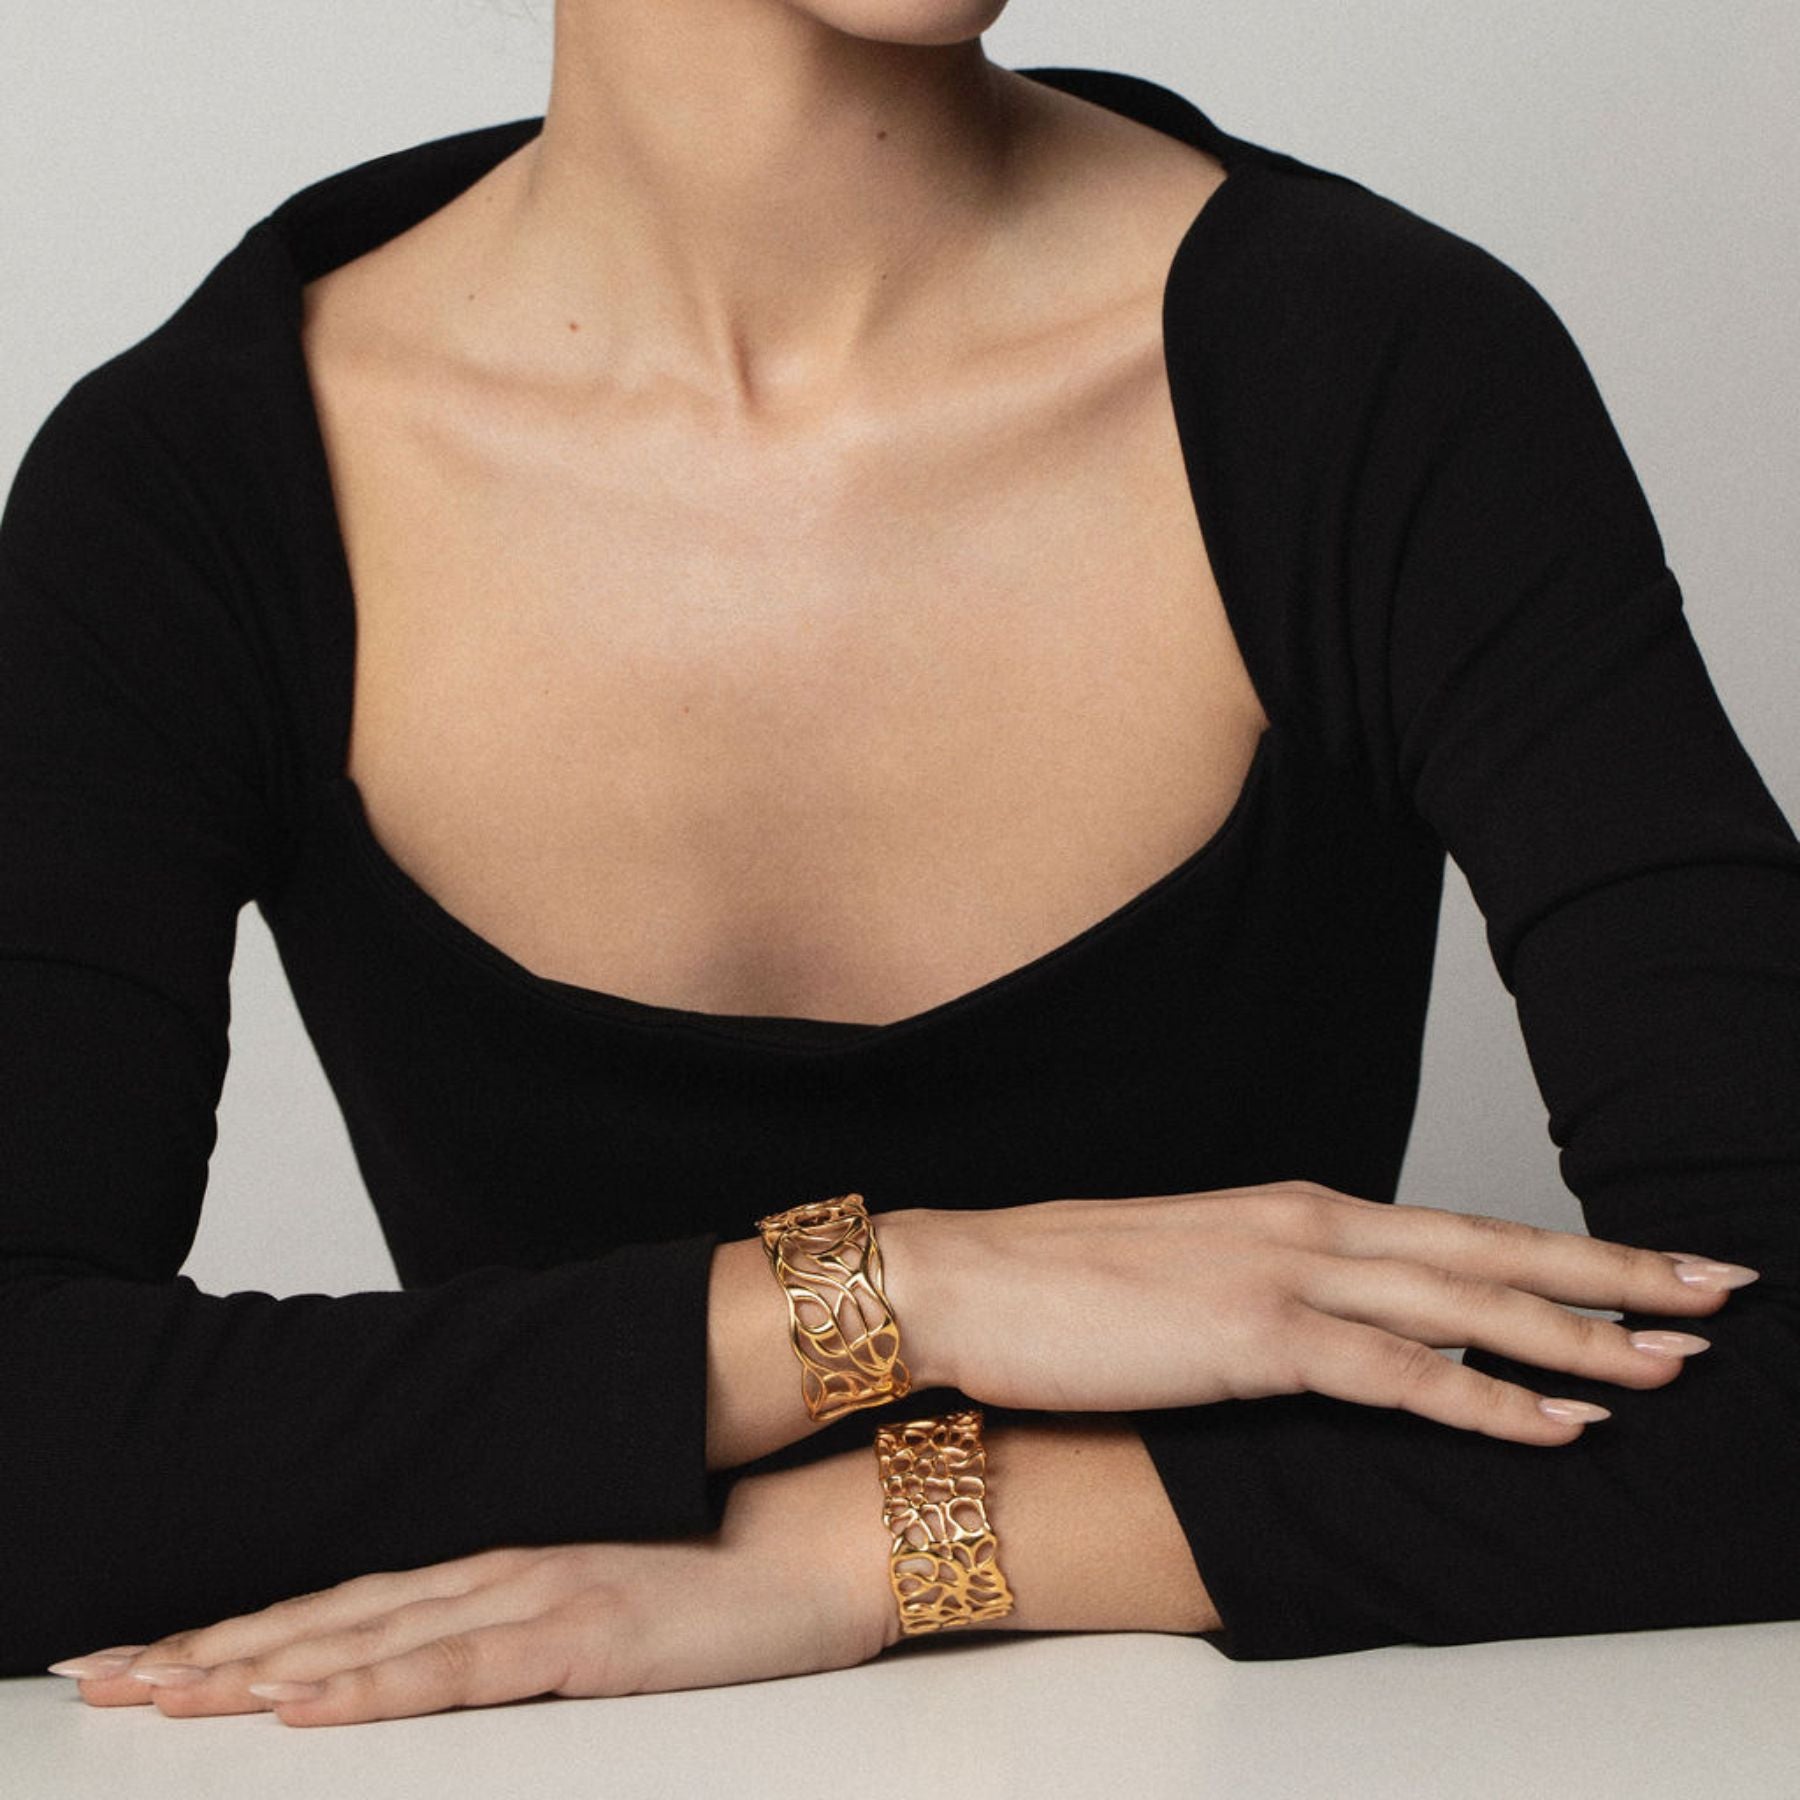 Model wearing Abstract cuff bracelets in 18k yellow gold.